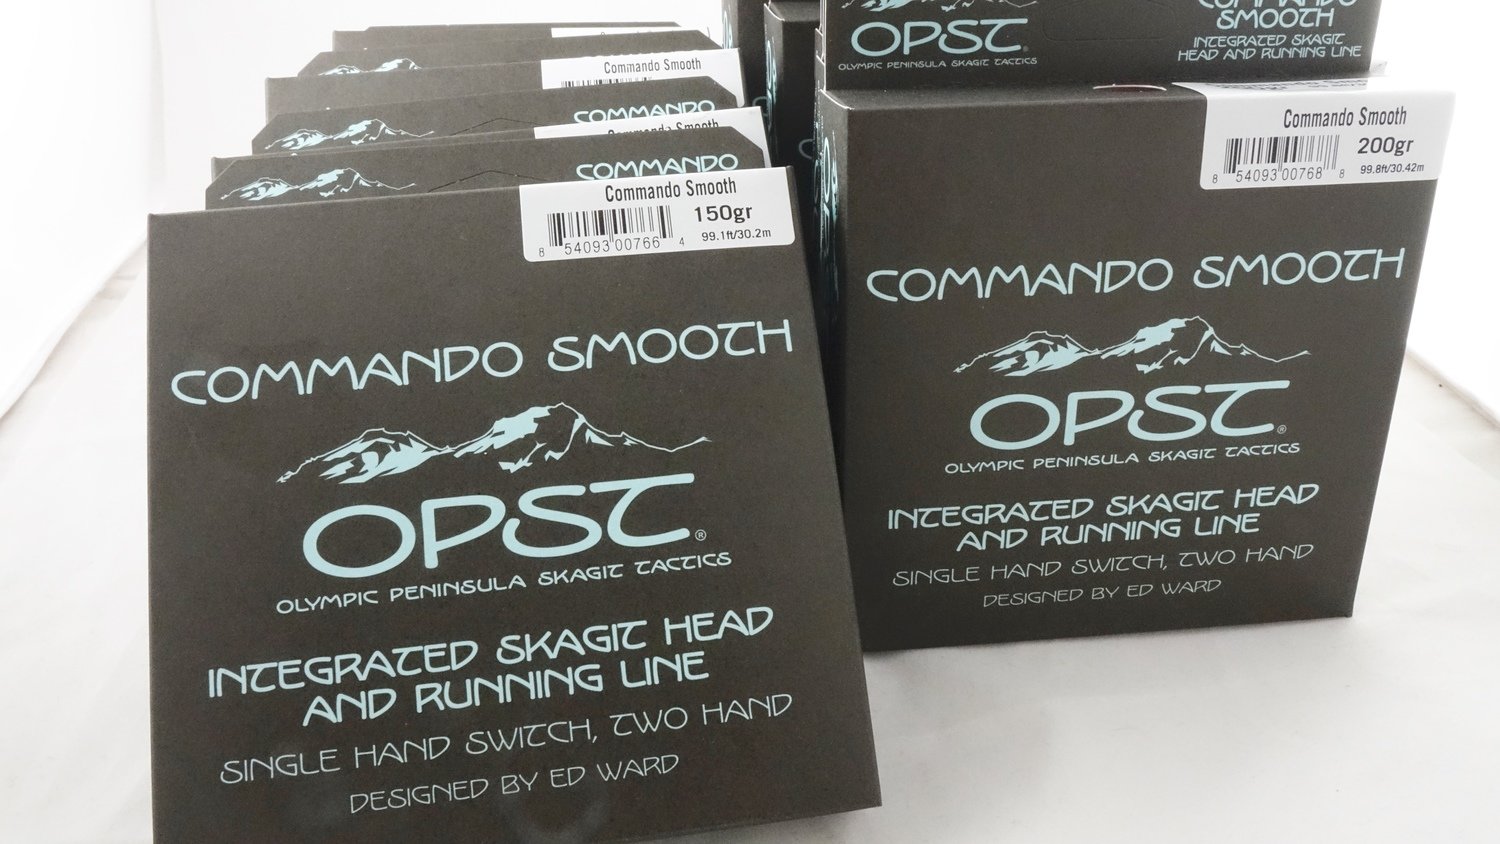 Commando Smooth Integrated Skagit Head/Running Line